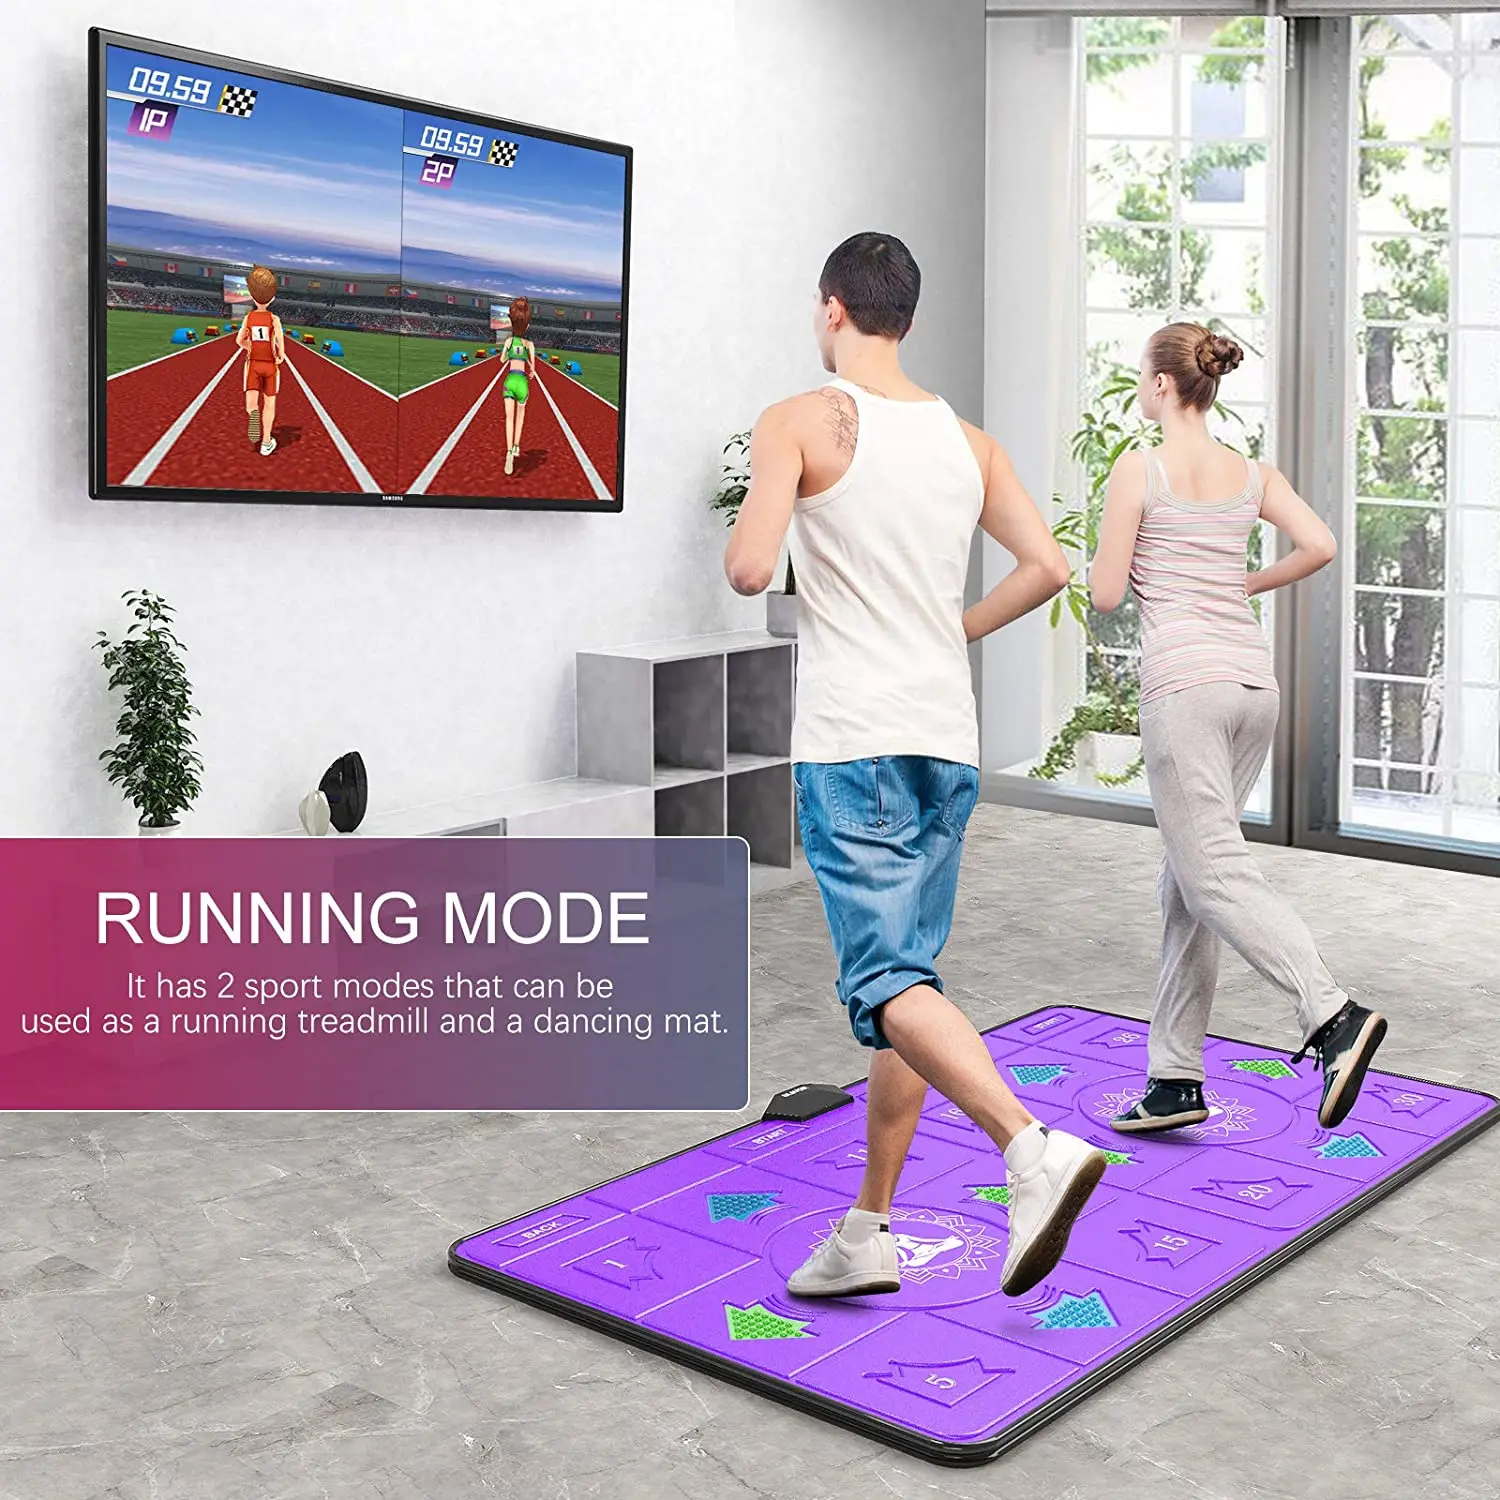 HDMI TV Computer Wireless slimming Yoga Dance Mat Game for Adult Kids Boys Girls Dance Floor Portable Musical Blanket Pad